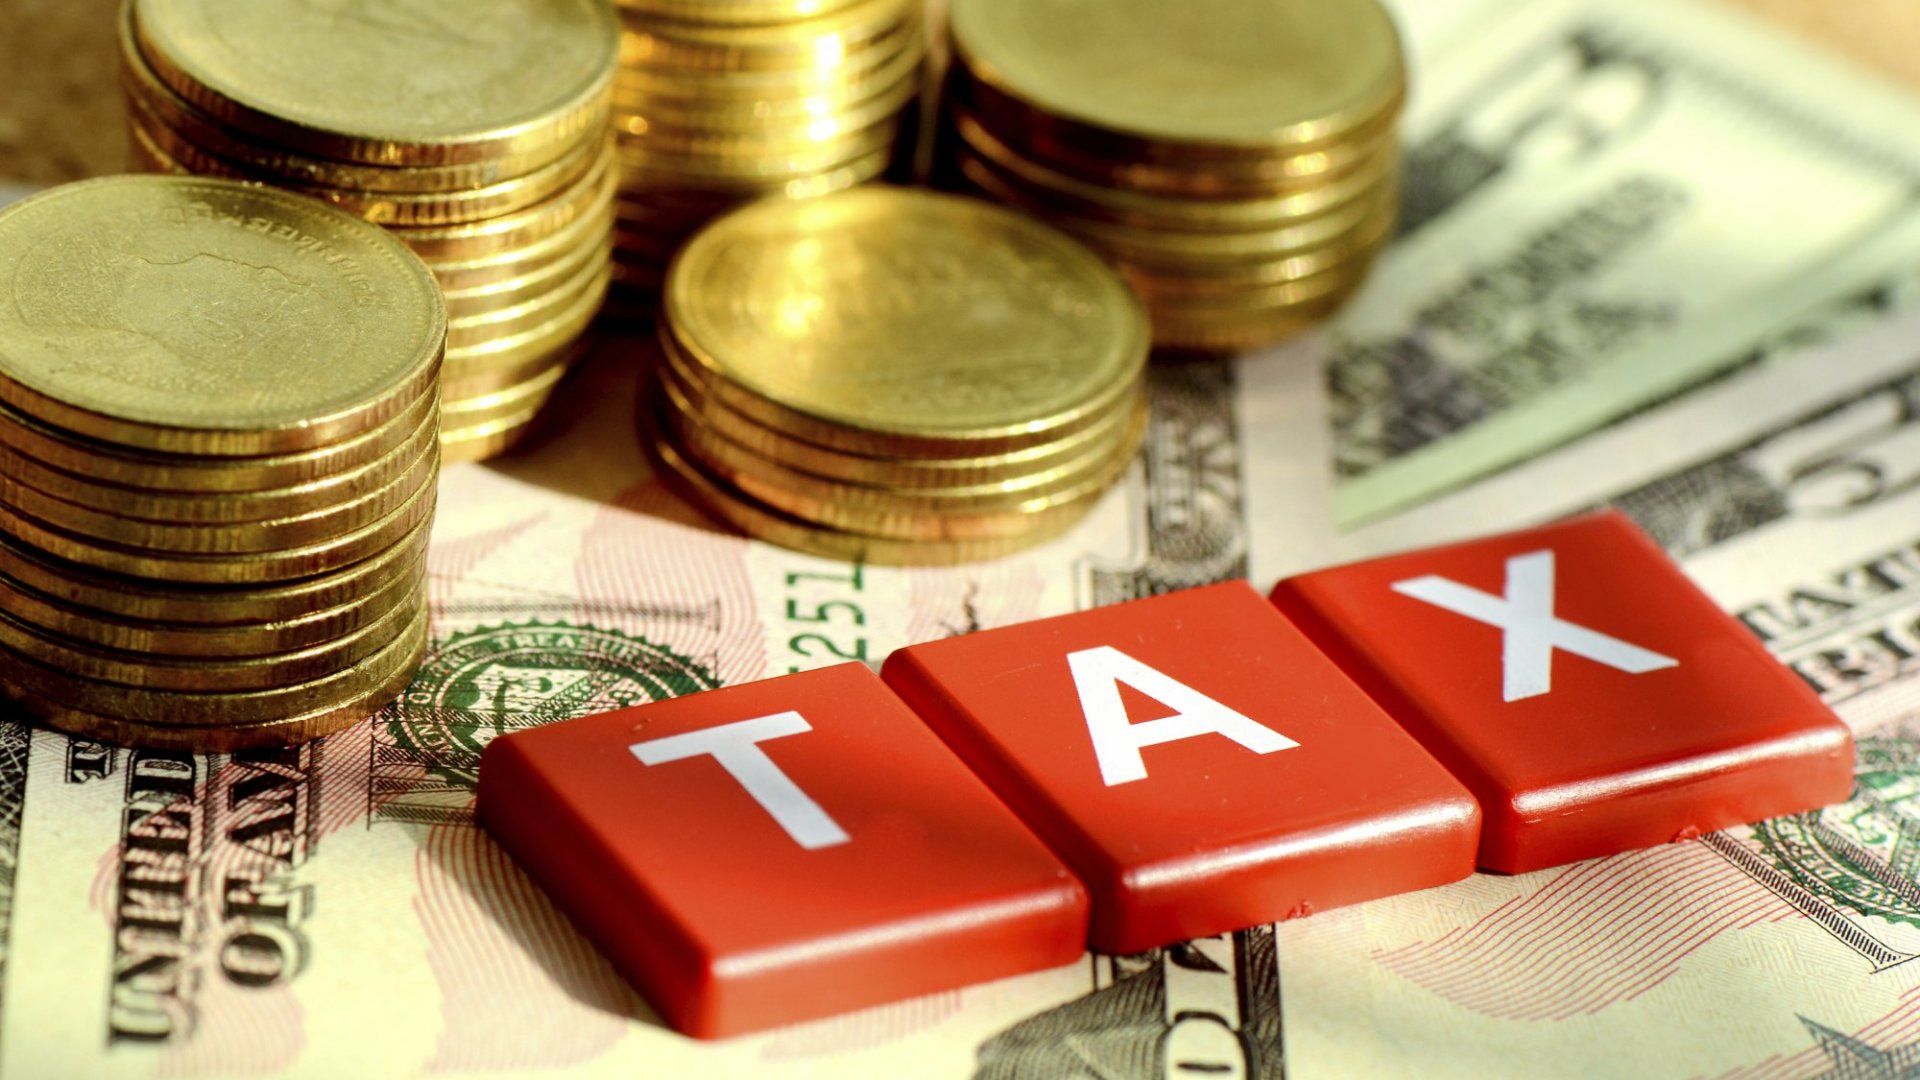 Tax revenue increases by 82.2 percent in Azerbaijan - Tax Service